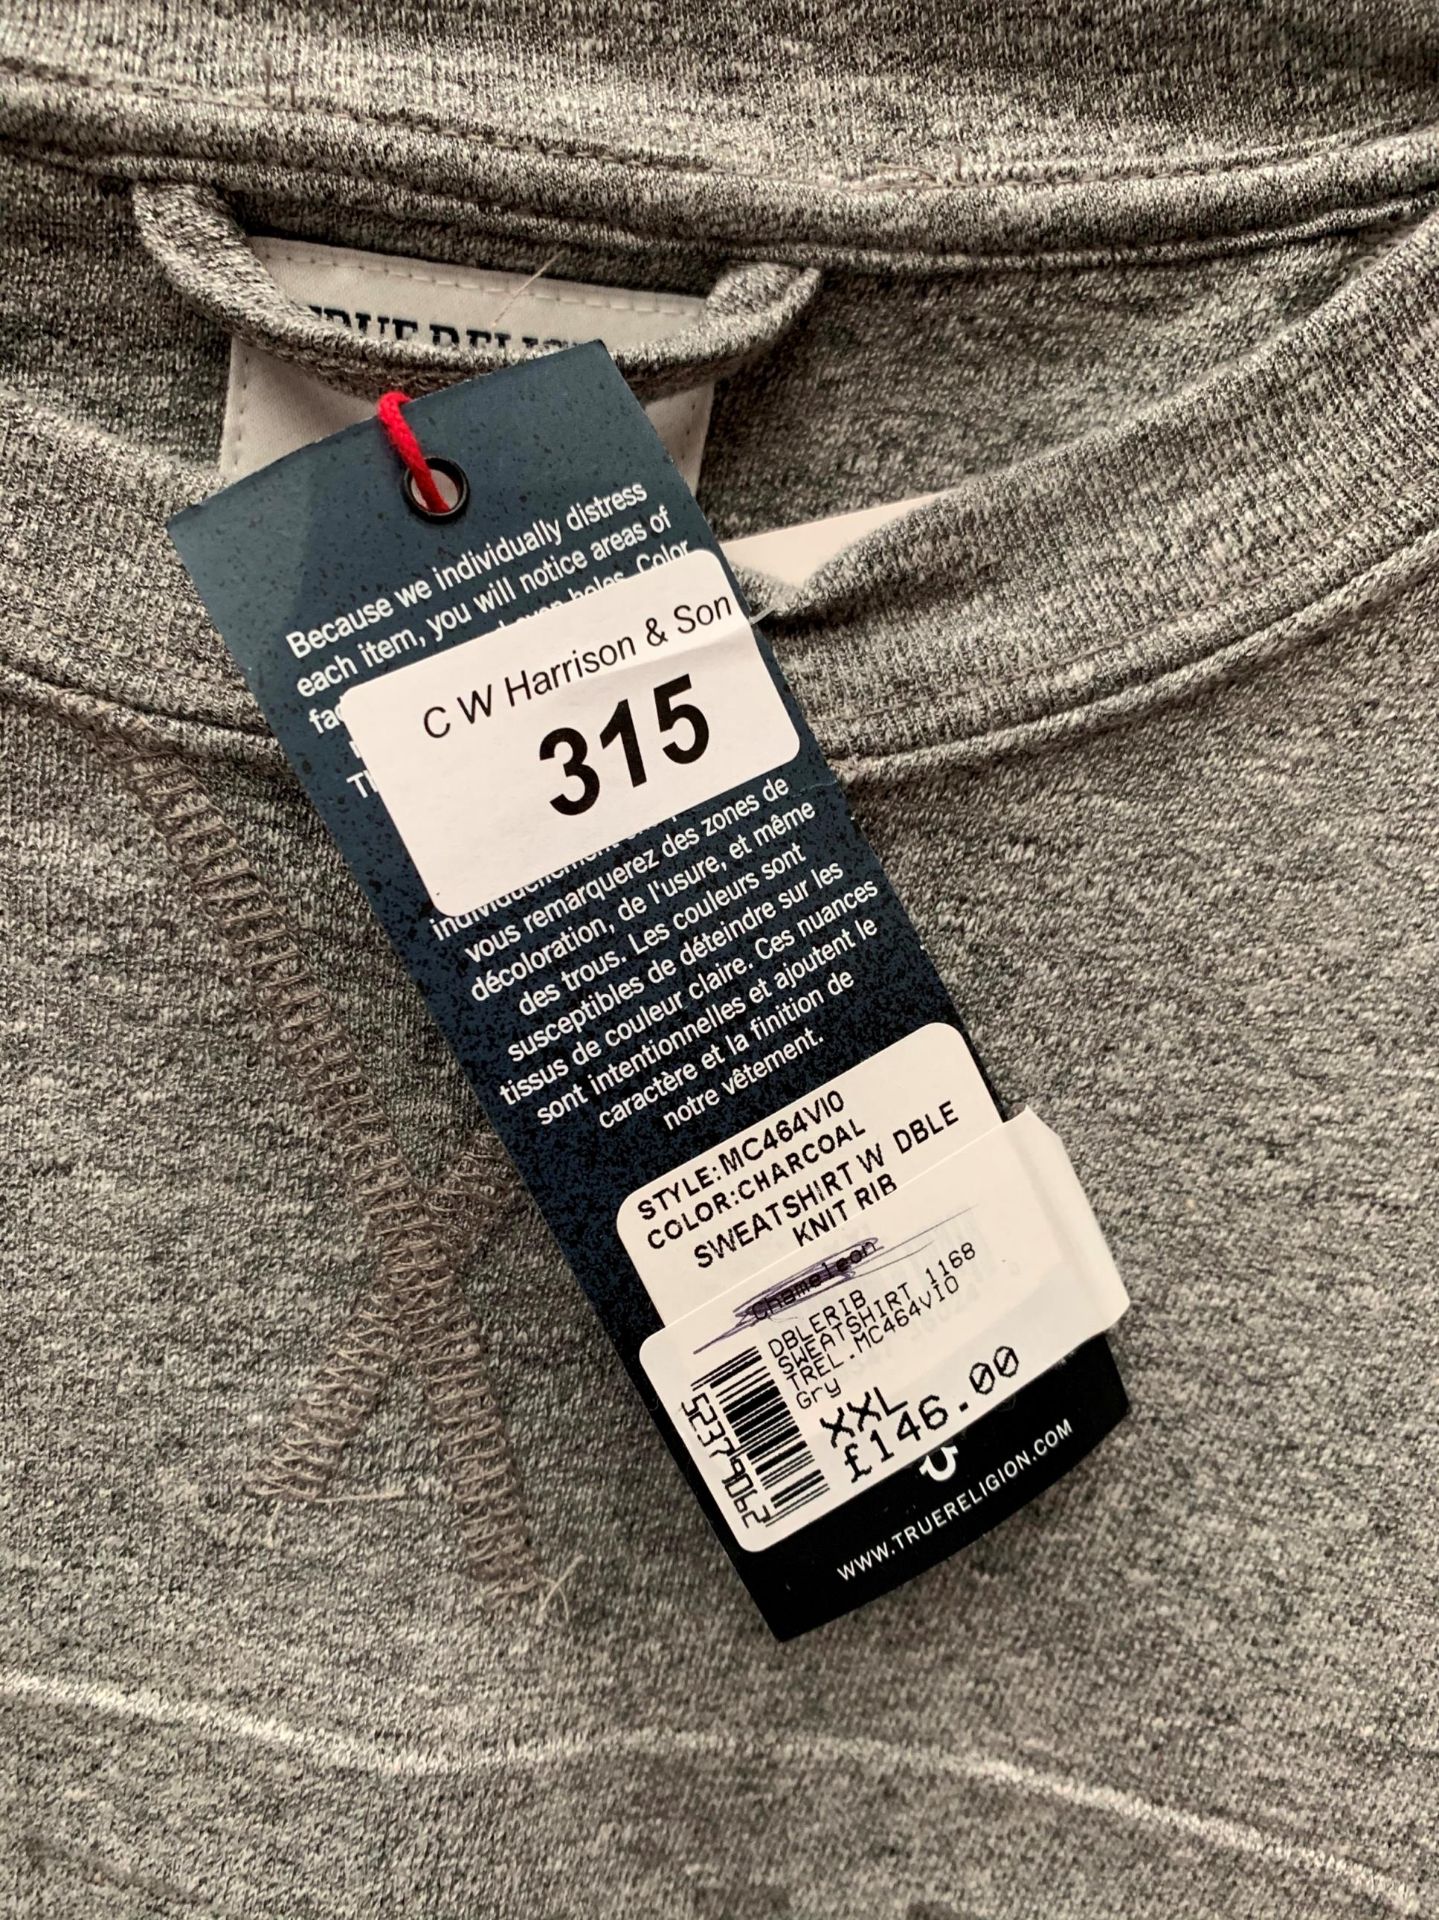 A True Religion men's sweatshirt, charcoal, size XXL, - Image 2 of 2